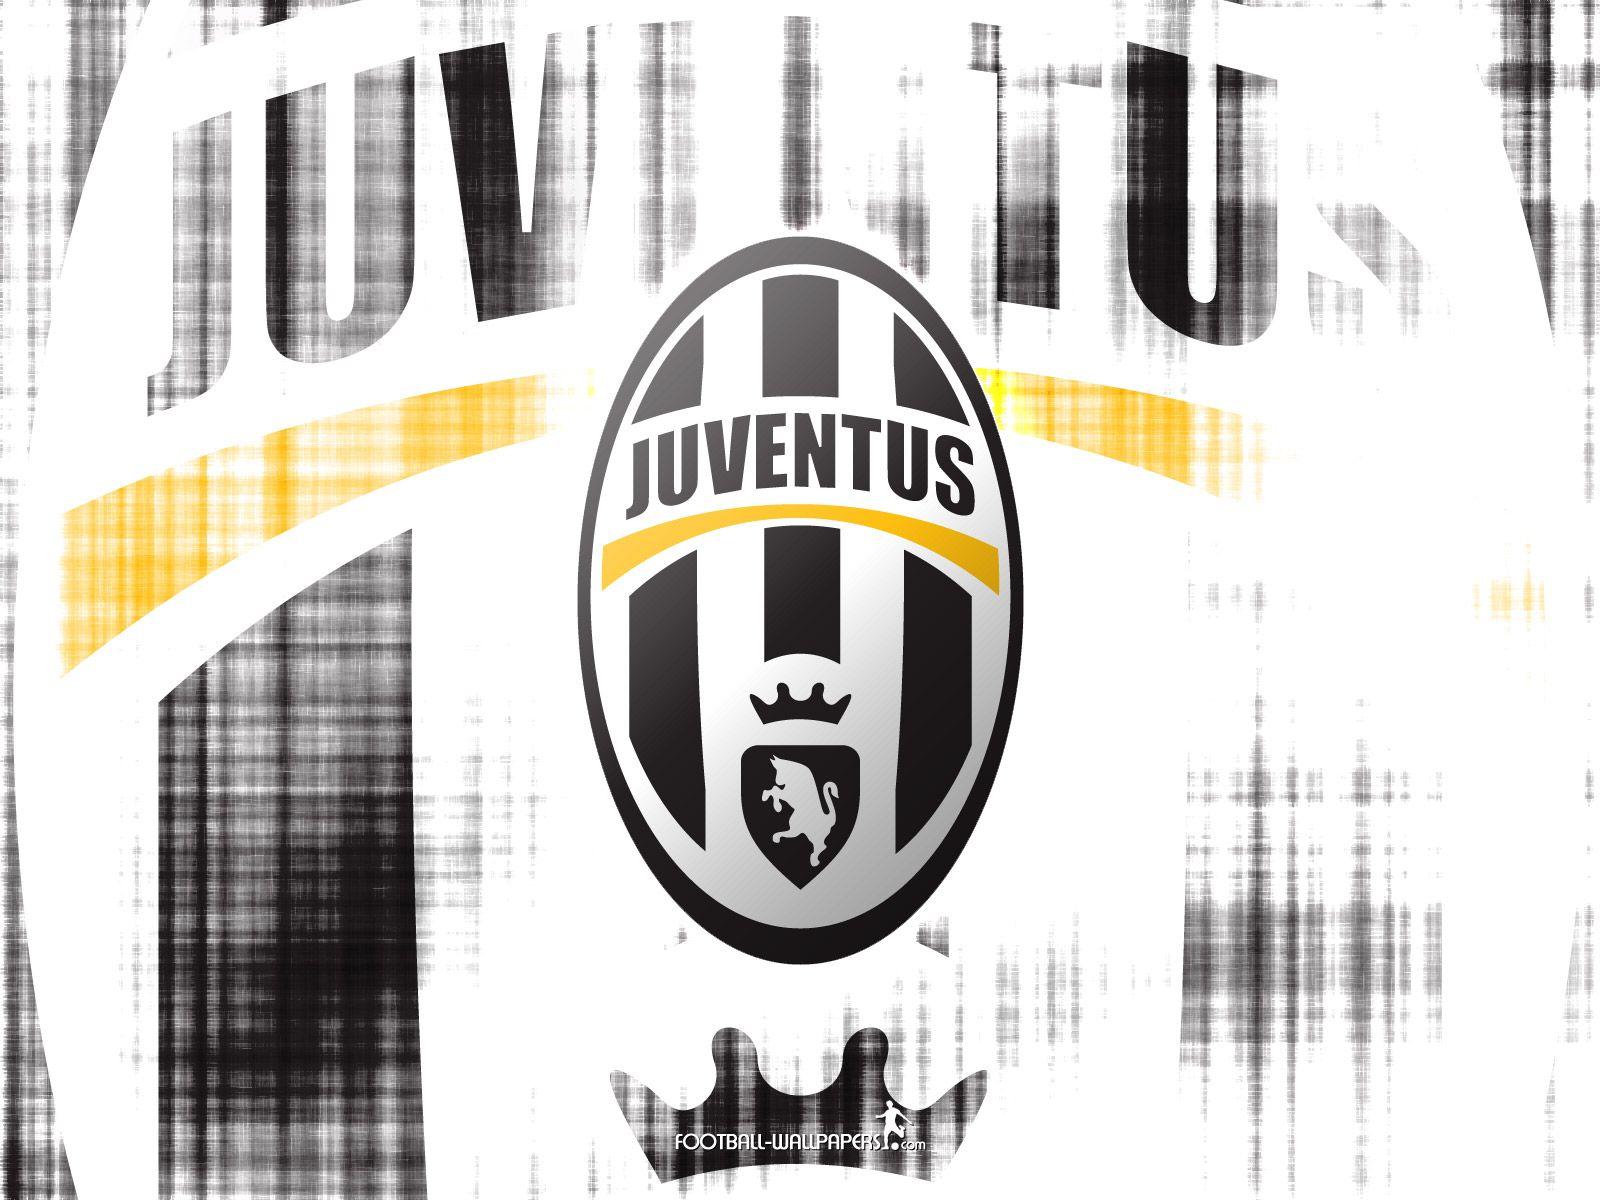 Juventus Wallpaper. Football Wallpaper and Videos